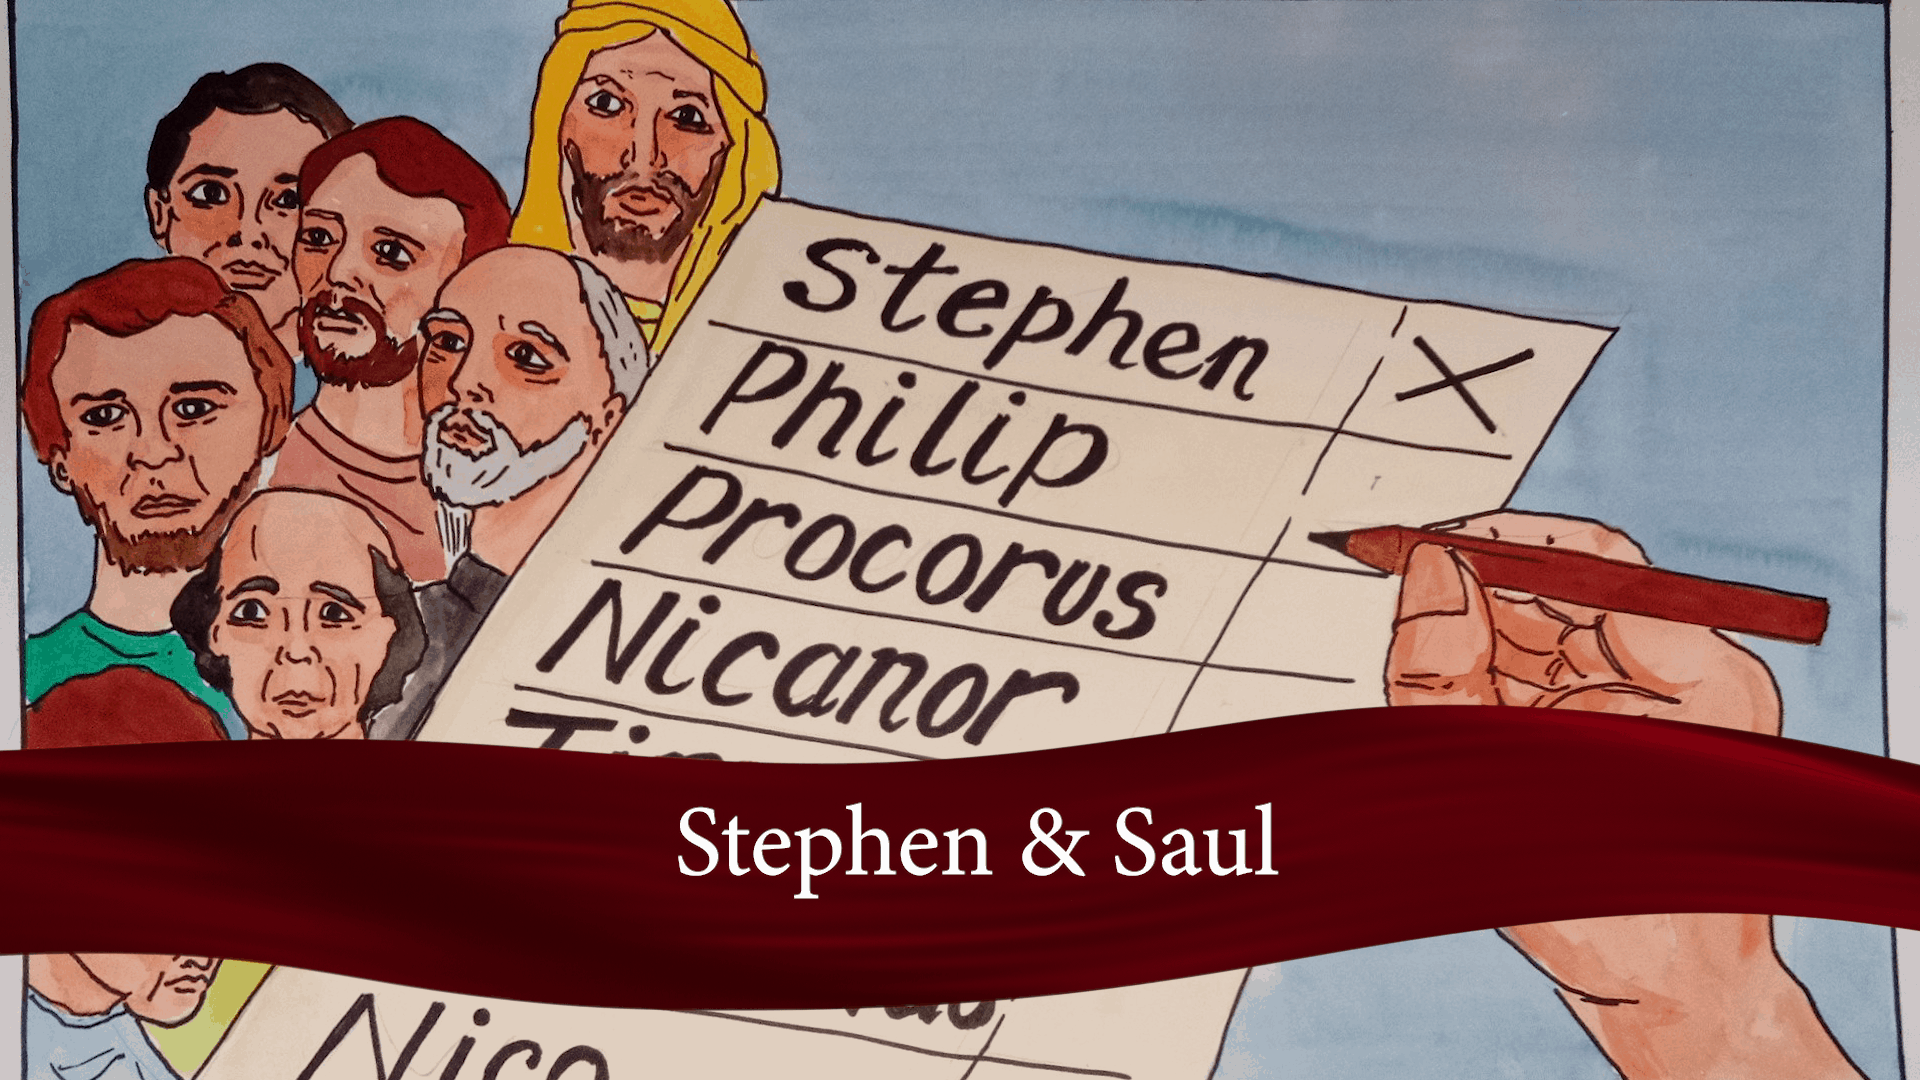 Stephen & Saul